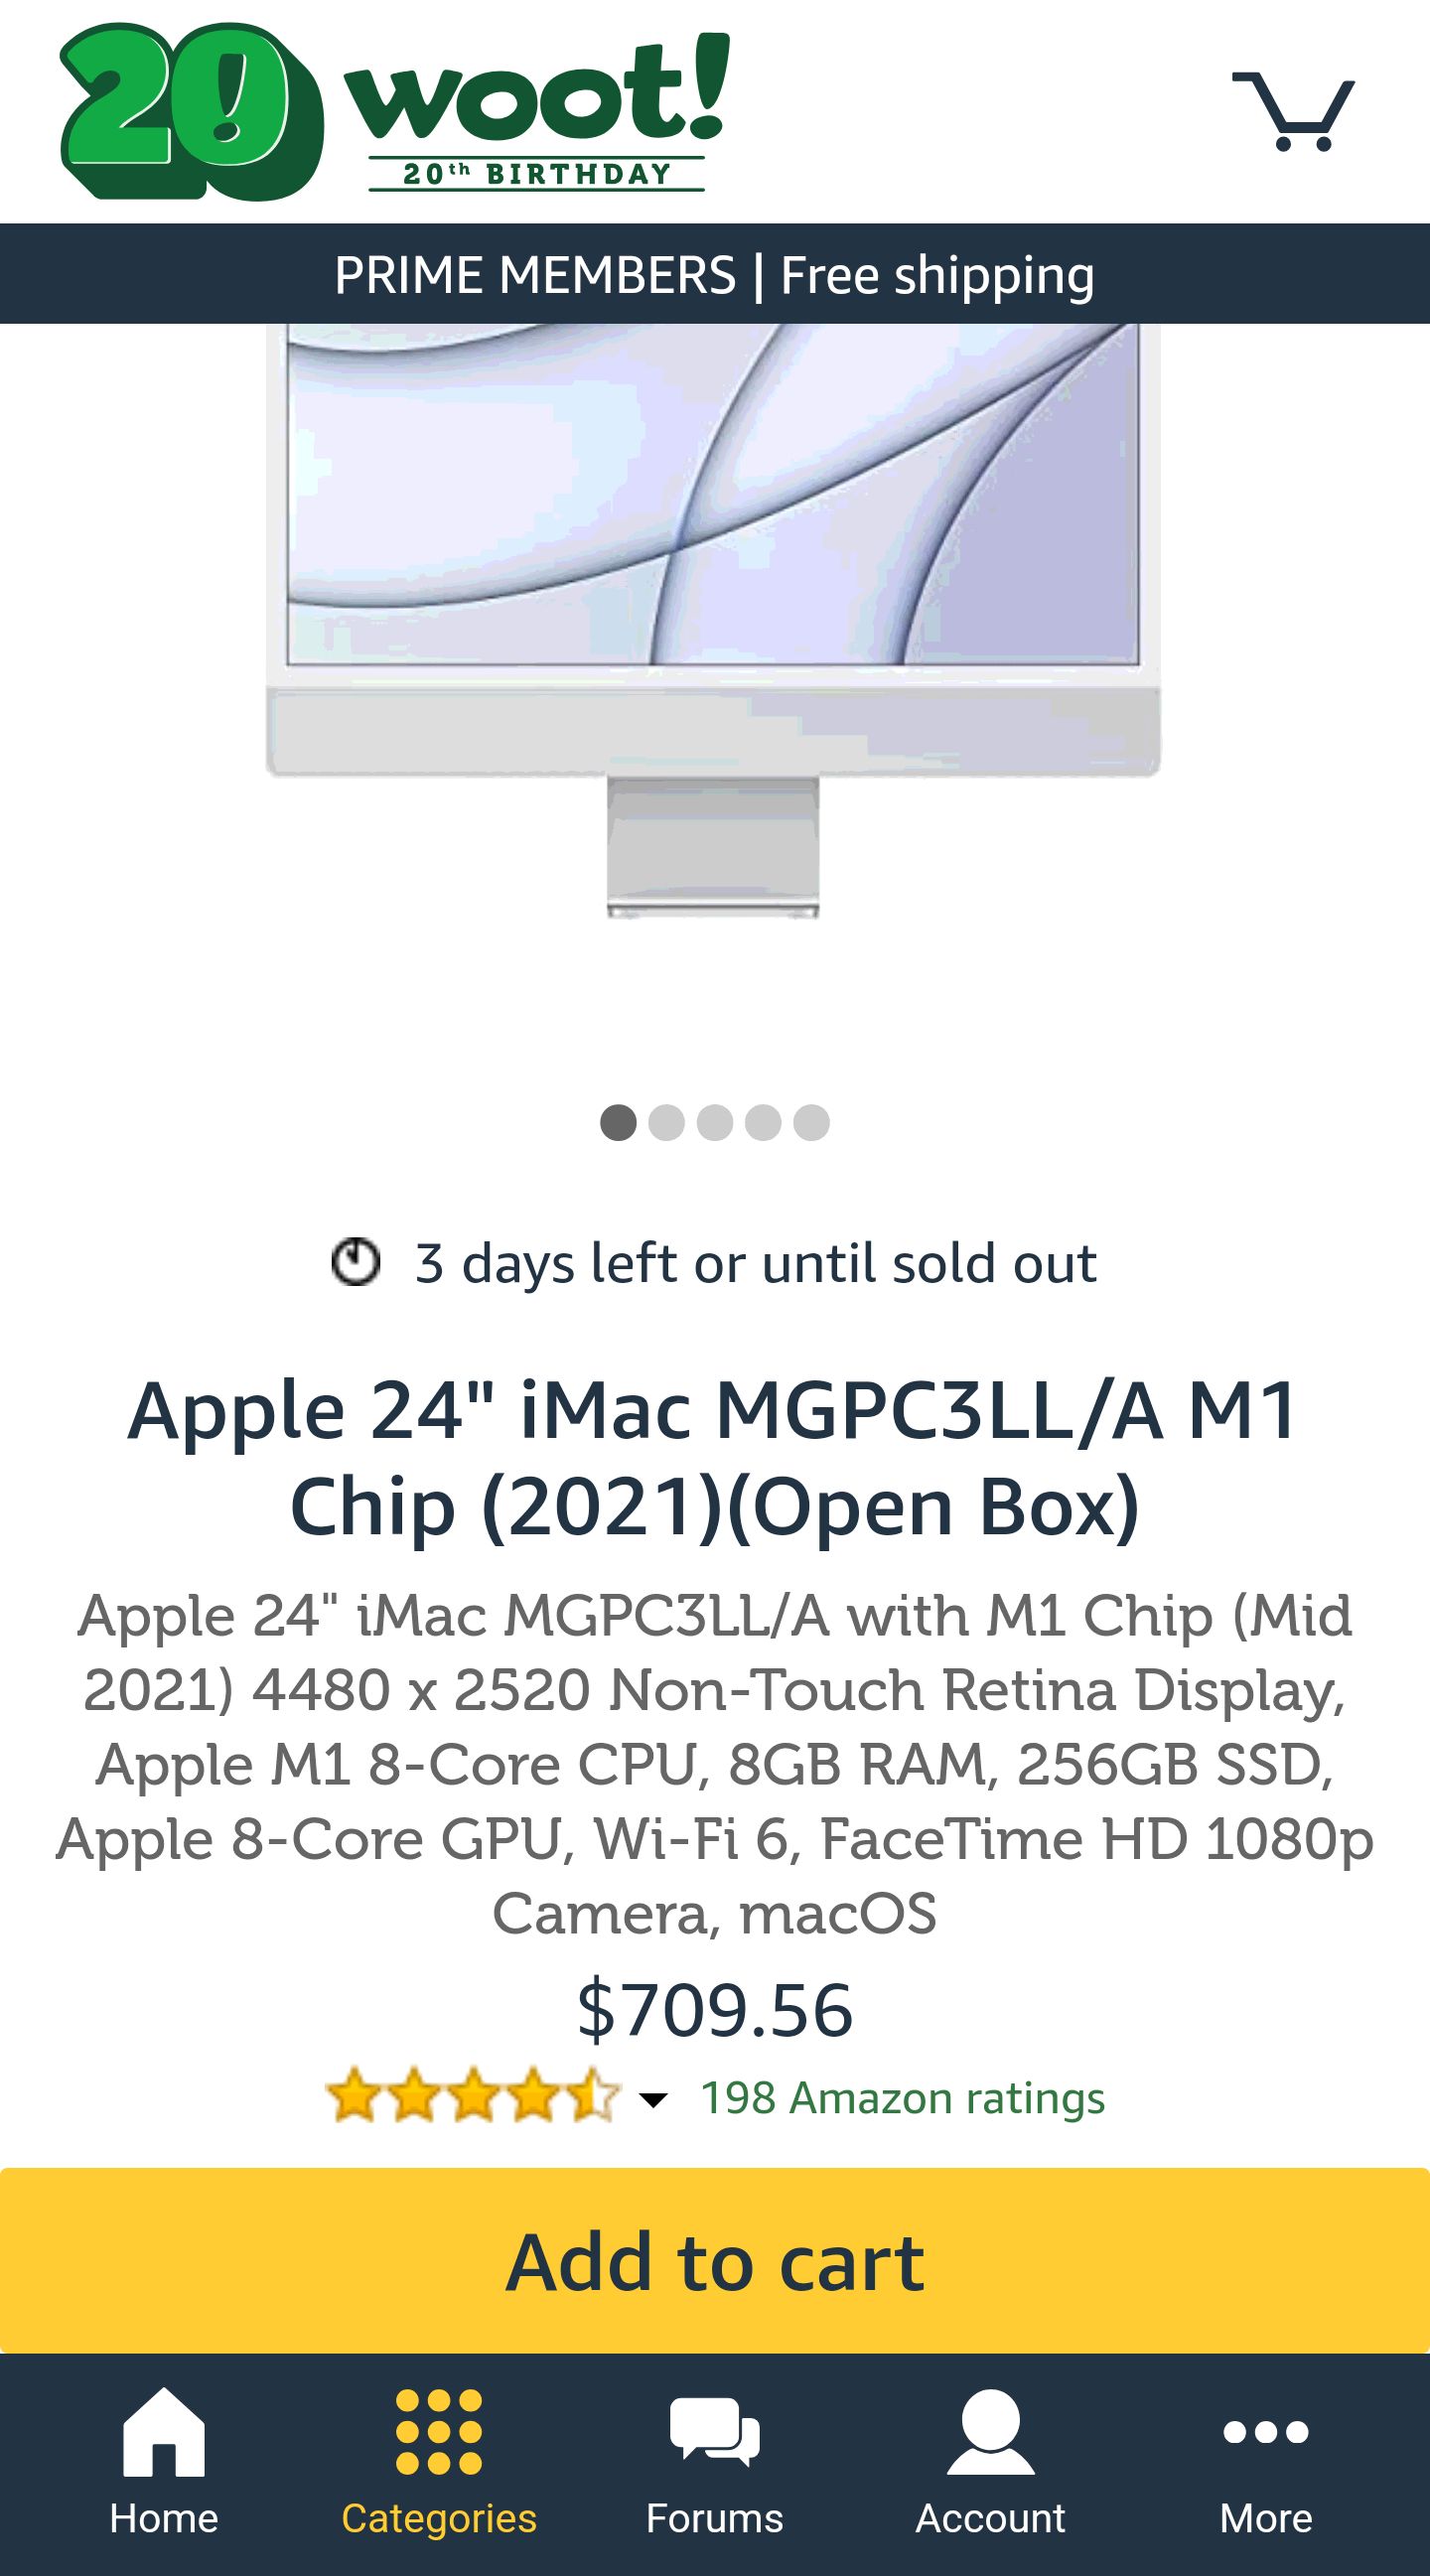 Apple 24" iMac MGPC3LL/A M1 Chip (2021)(Open Box)